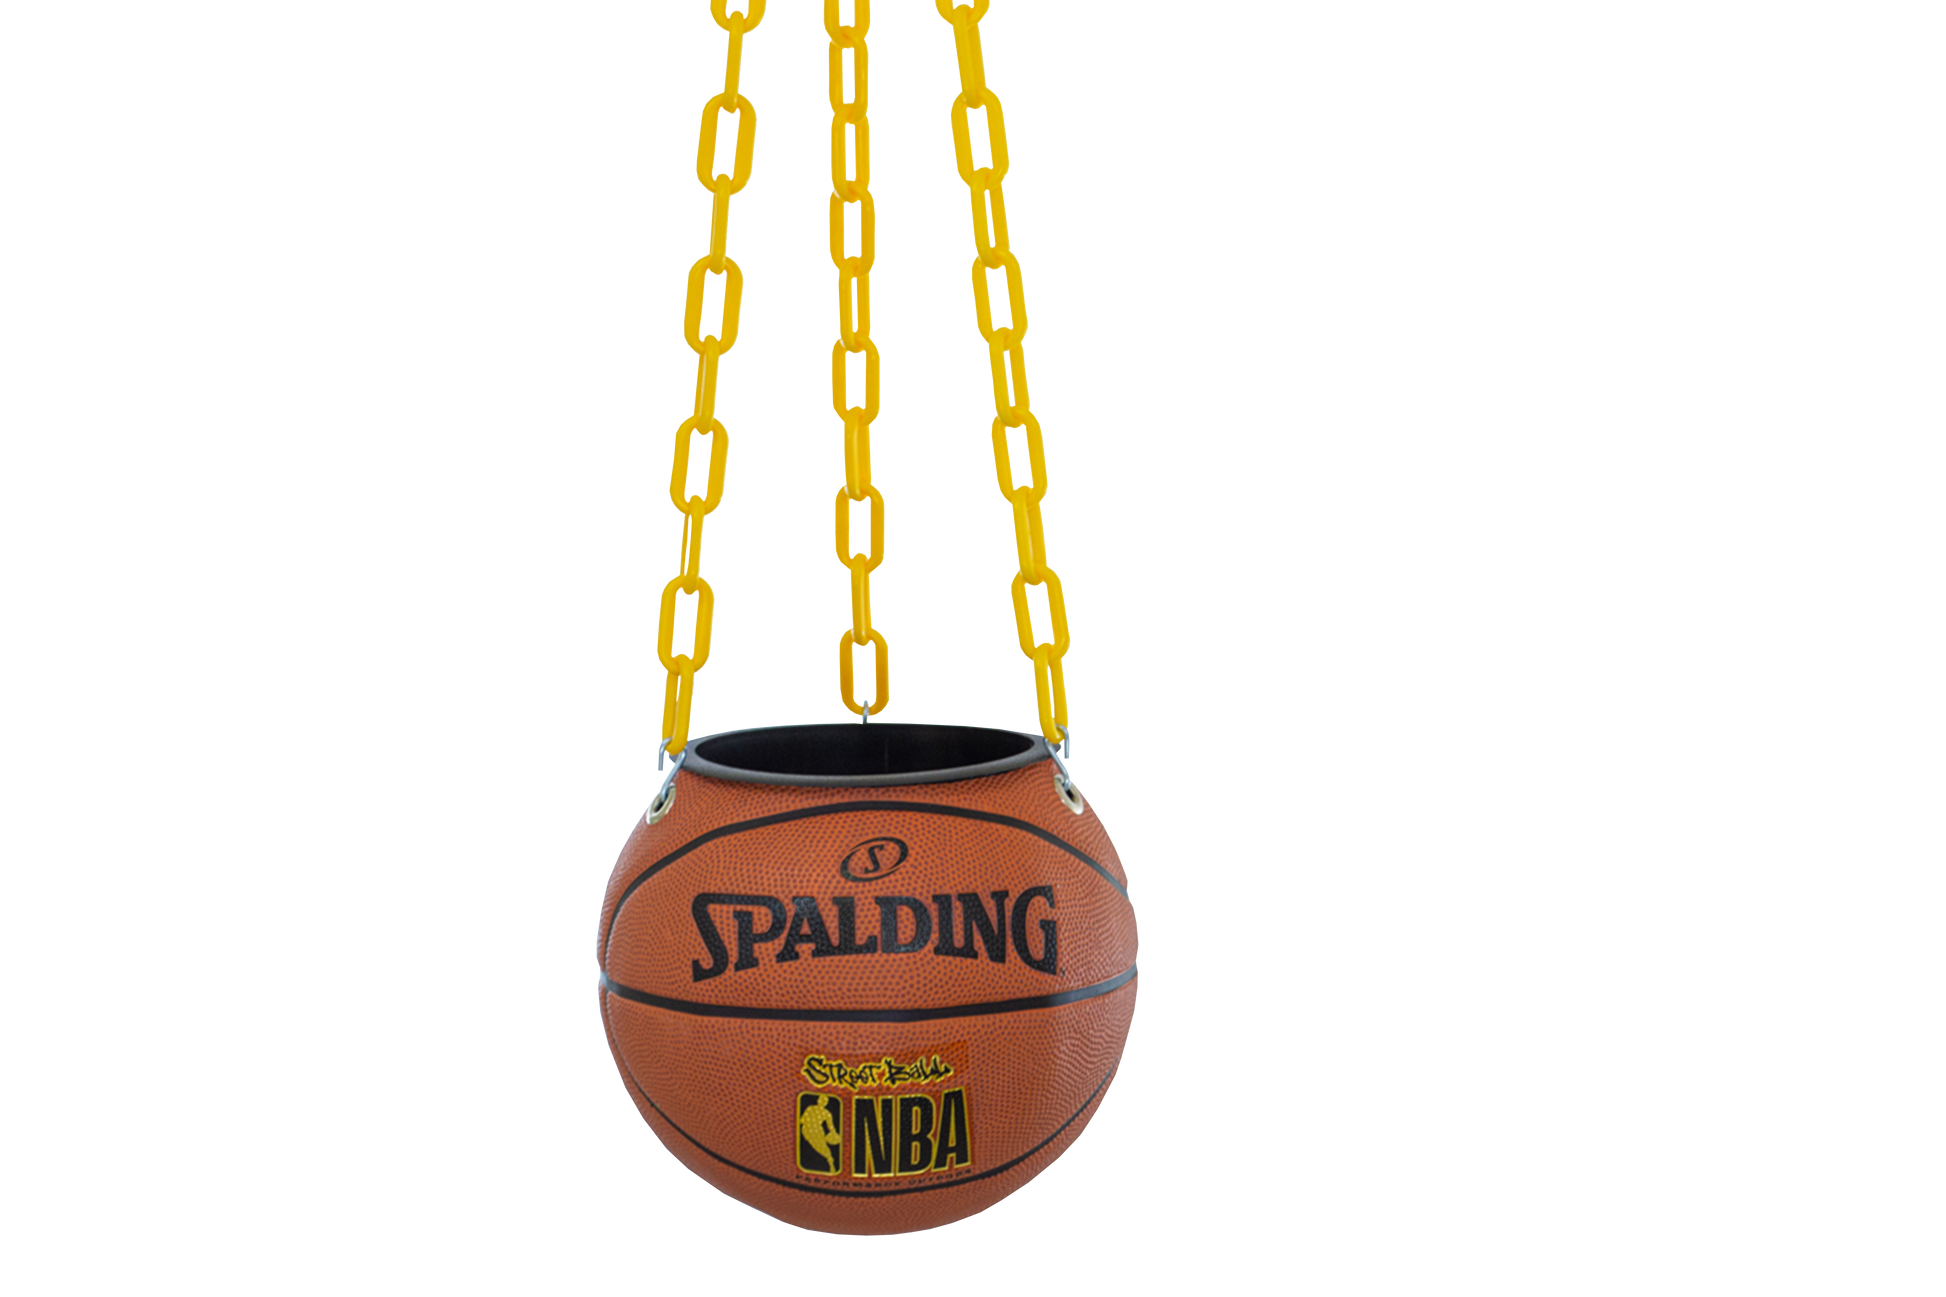 Original Hanging Basketball Planter - The Standard Design Group